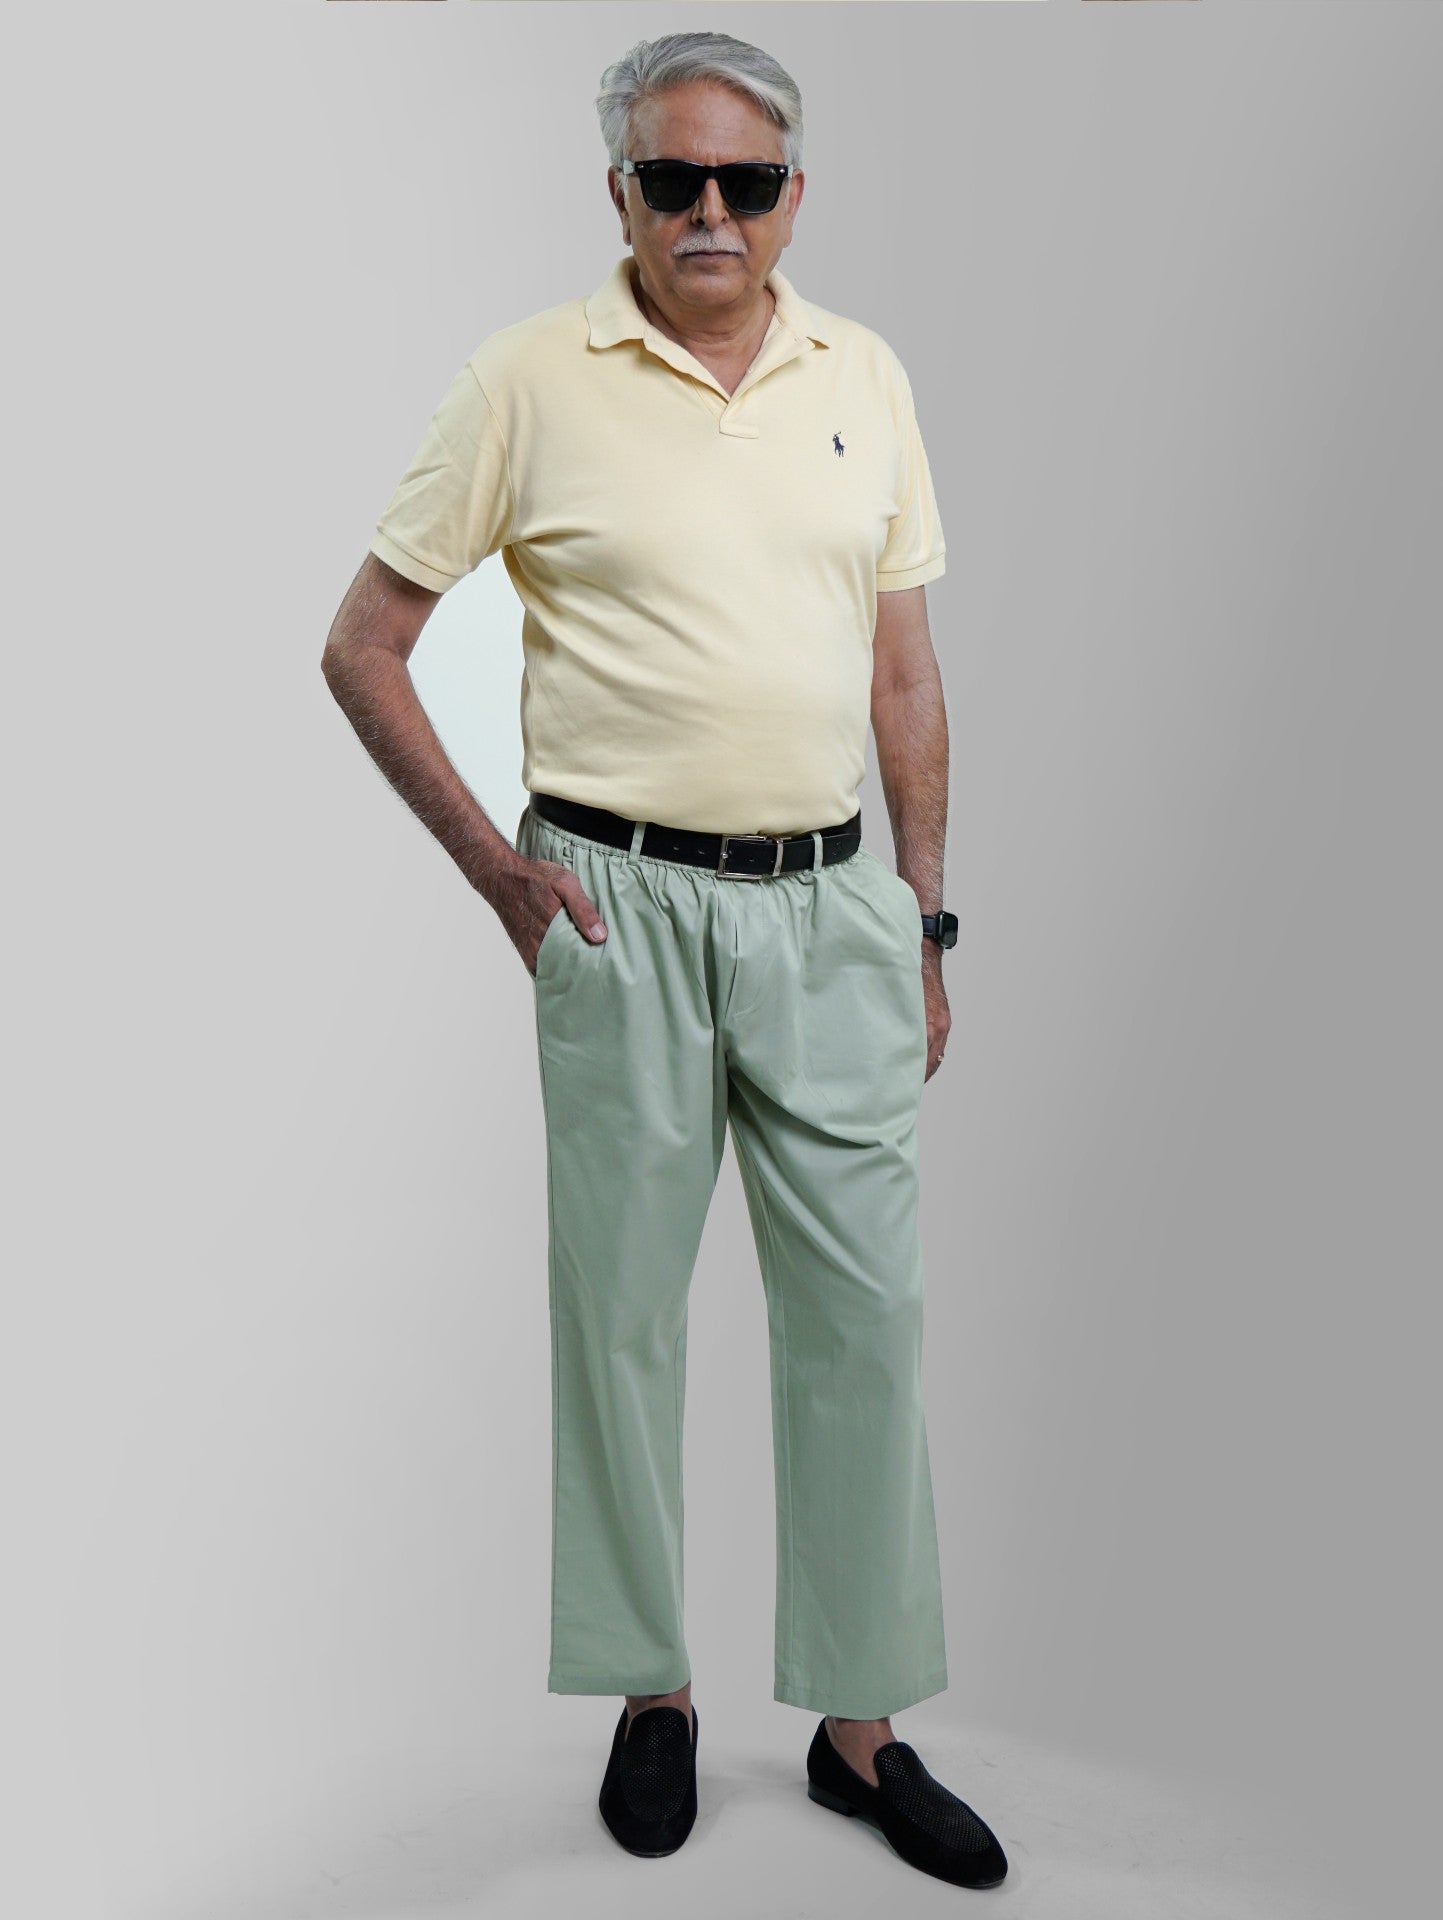 Buy Comfortable Elastic Waist Trousers for Seniors in India – HAXOR